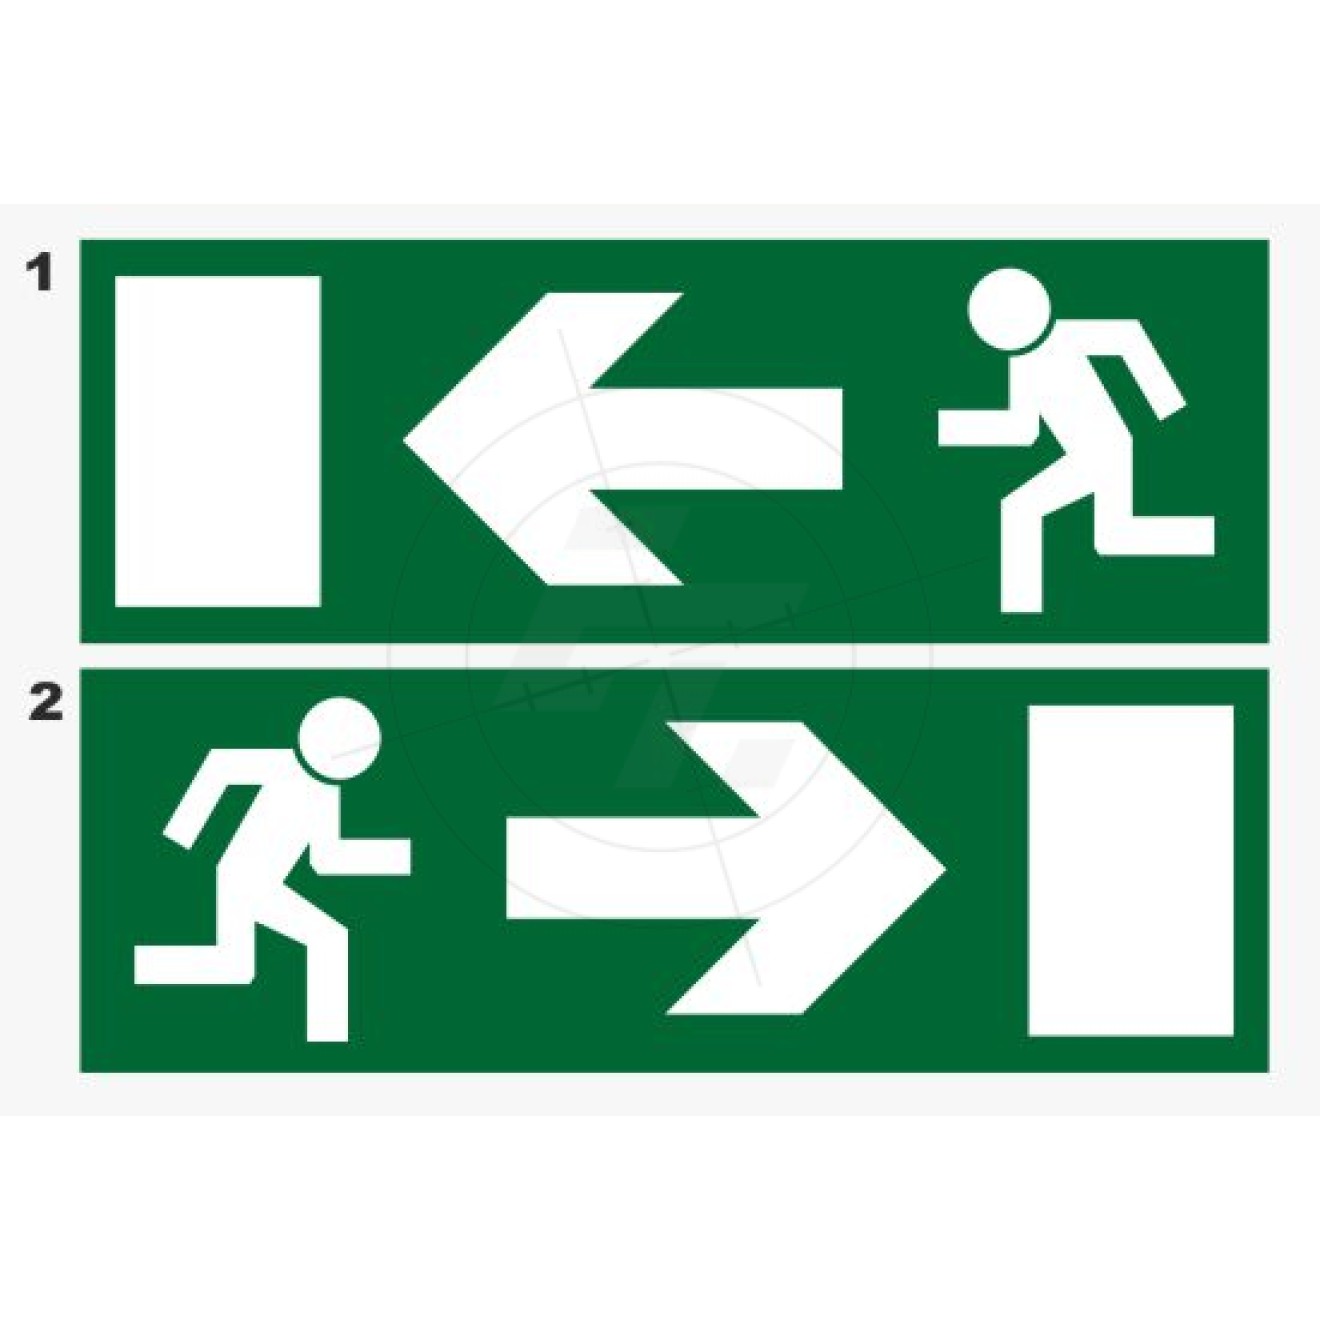 Emergency exit, marking escape routes